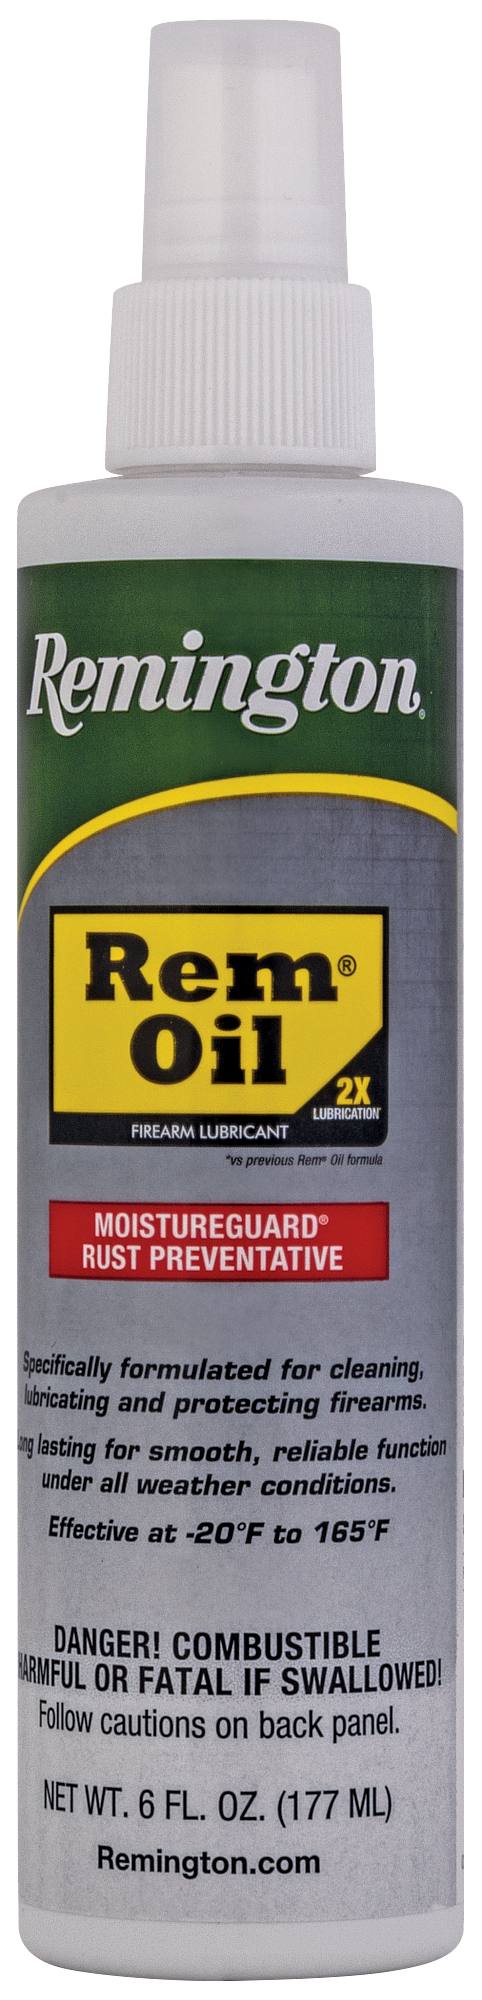 Remington Rem Oil Spray Can, 4 oz. [19906]